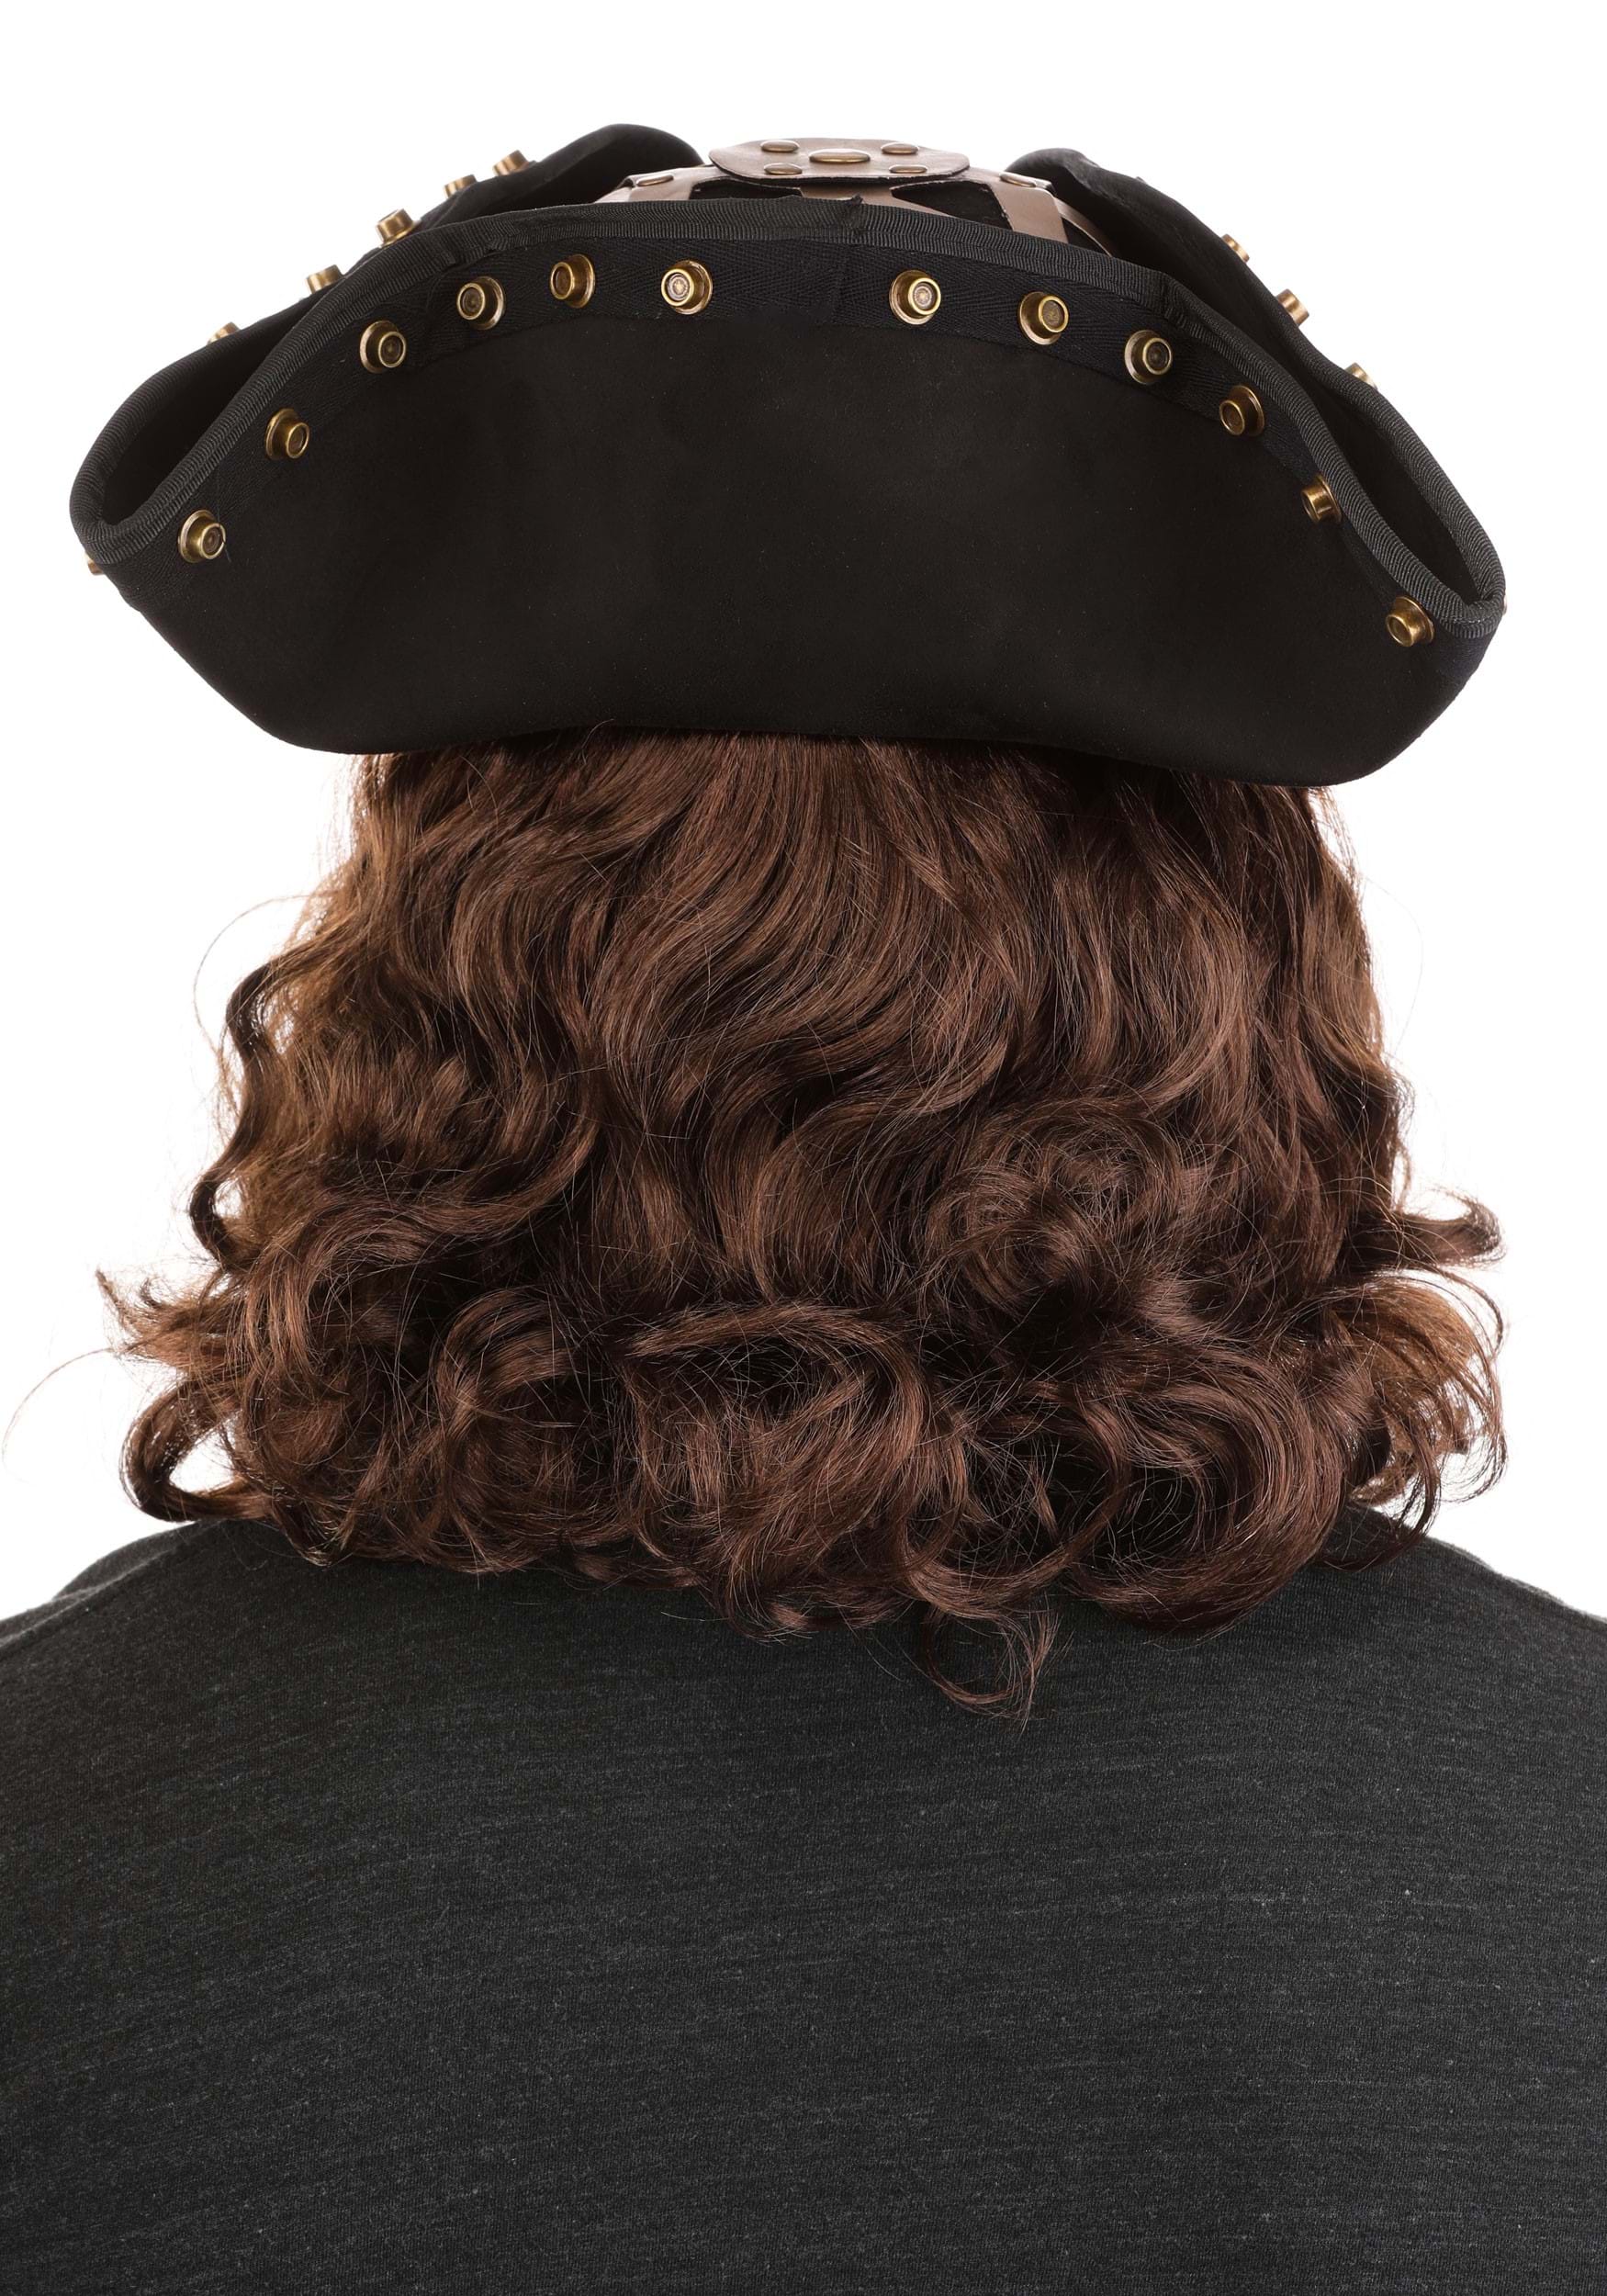 Blackbeard Pirate Hat Costume Accessory